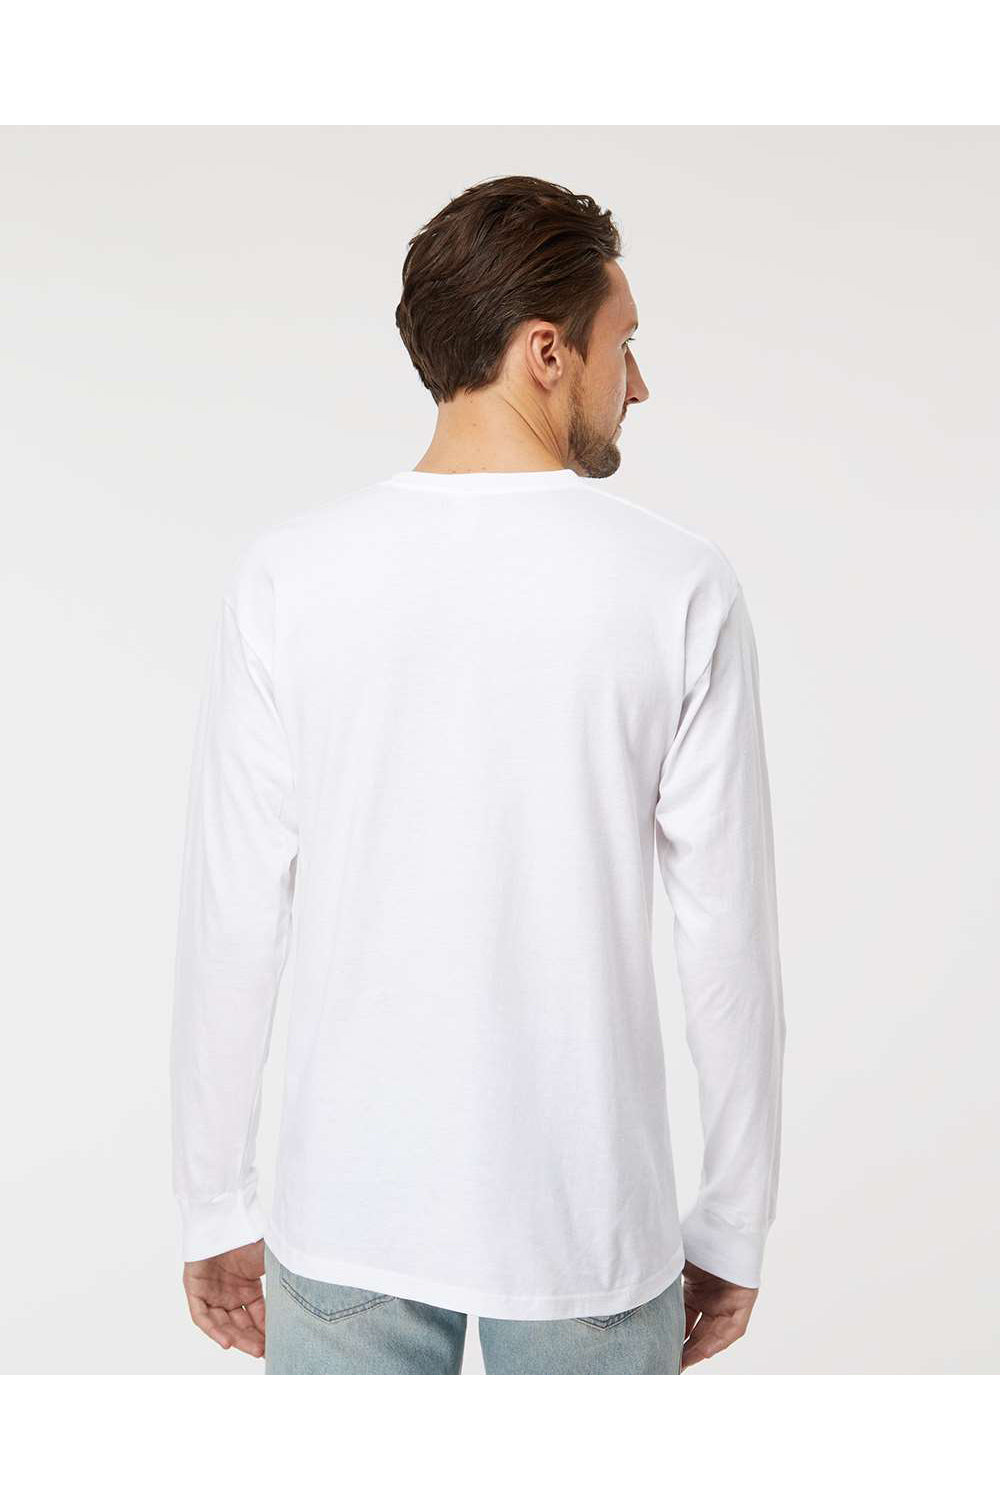 M&O 4820 Mens Gold Soft Touch Long Sleeve Crewneck T-Shirt White Model Back